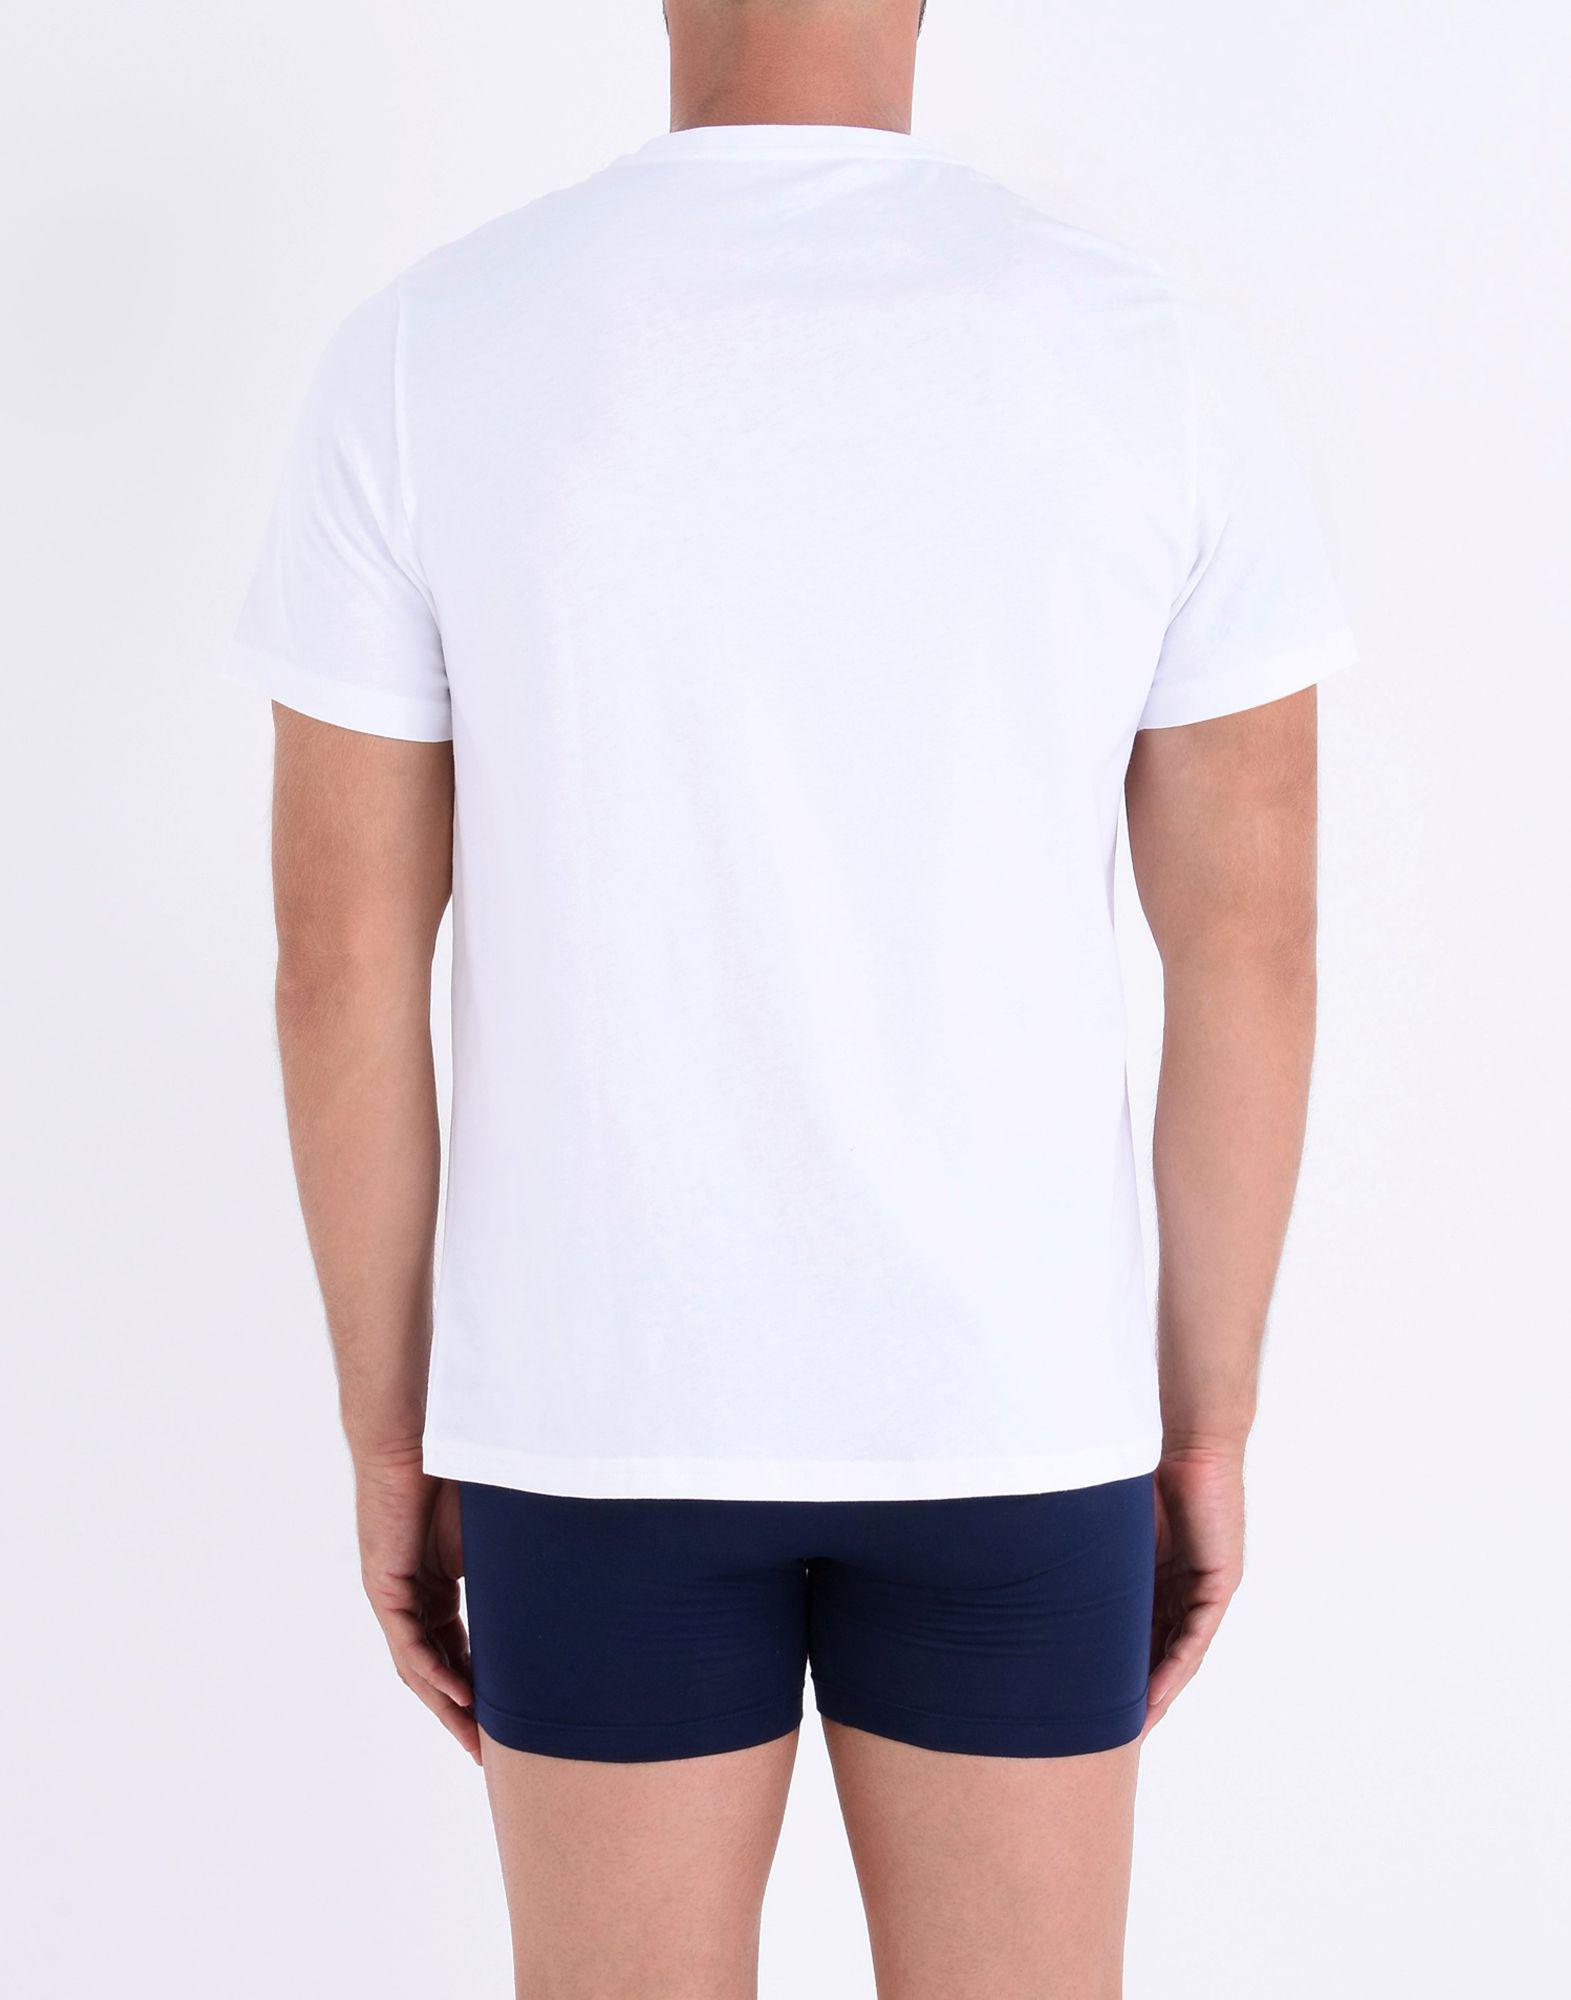 Polo Ralph Lauren Cotton Undershirt in White for Men - Lyst